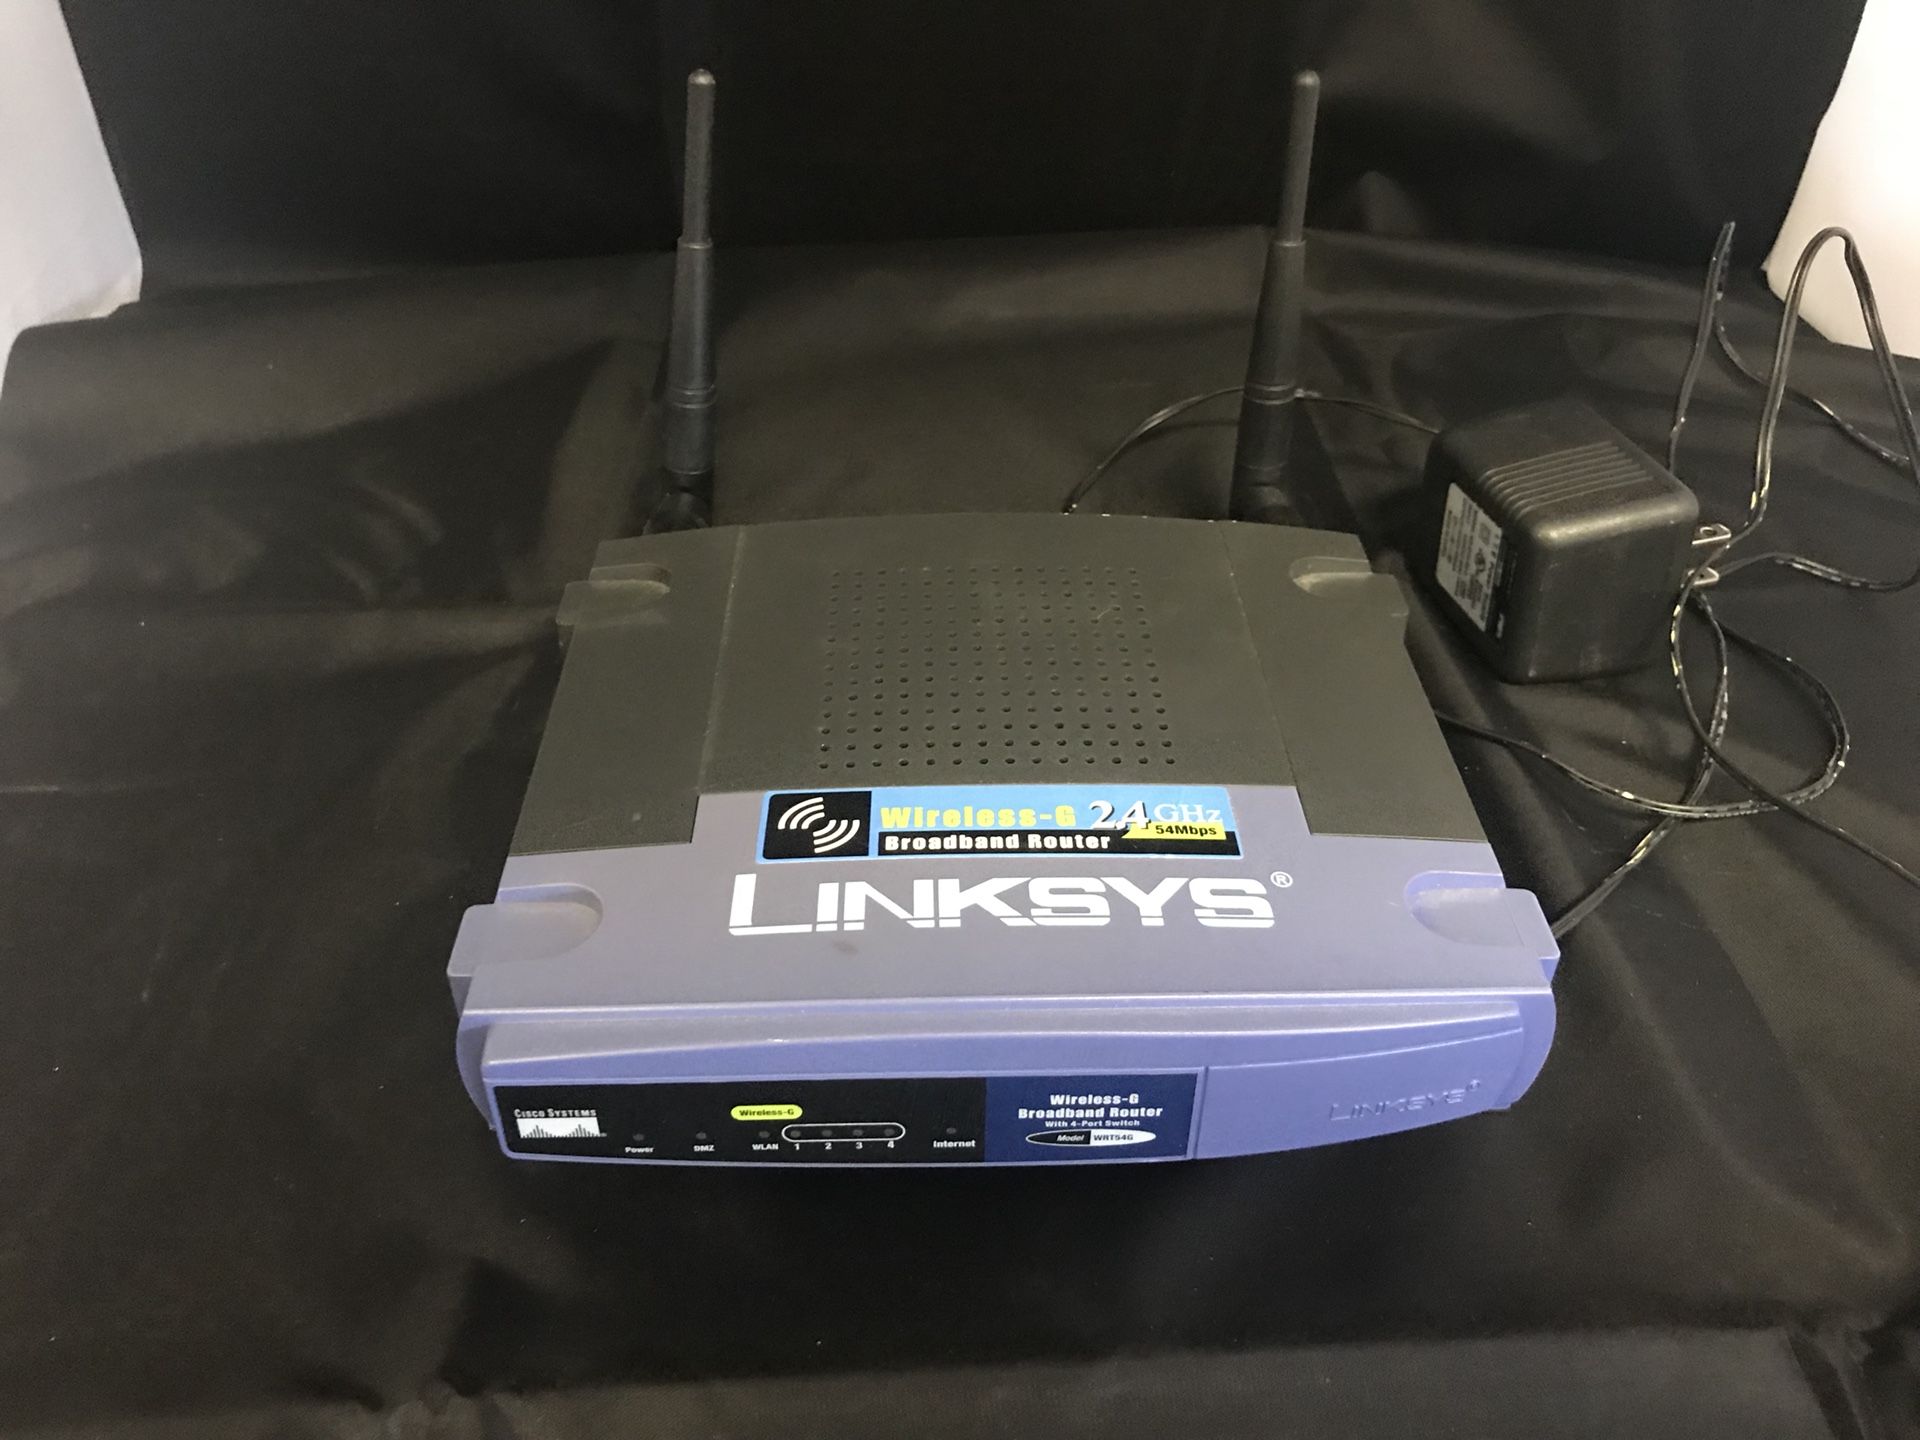 Linksys Wireless G 2.4 ghz 54 mbps Broadband Router WRT54G